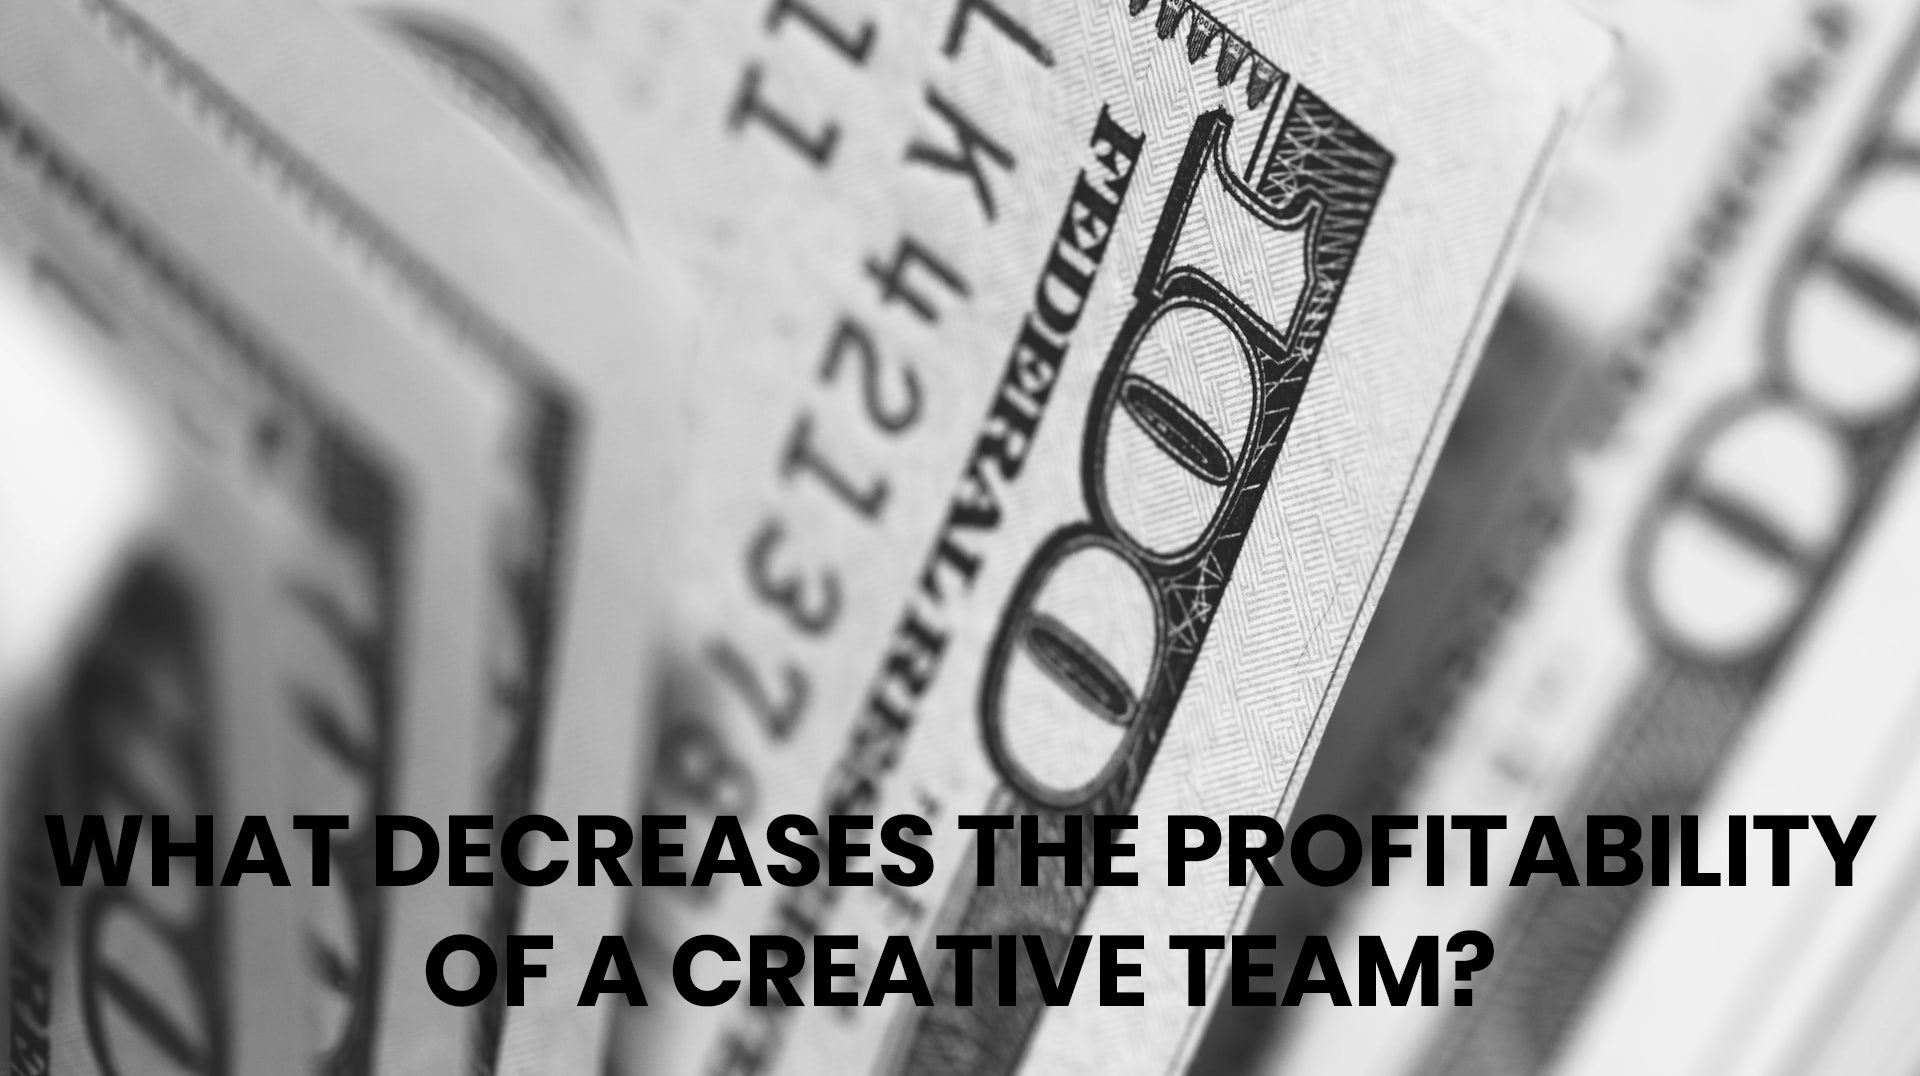 What decreases the profitability of a creative team?